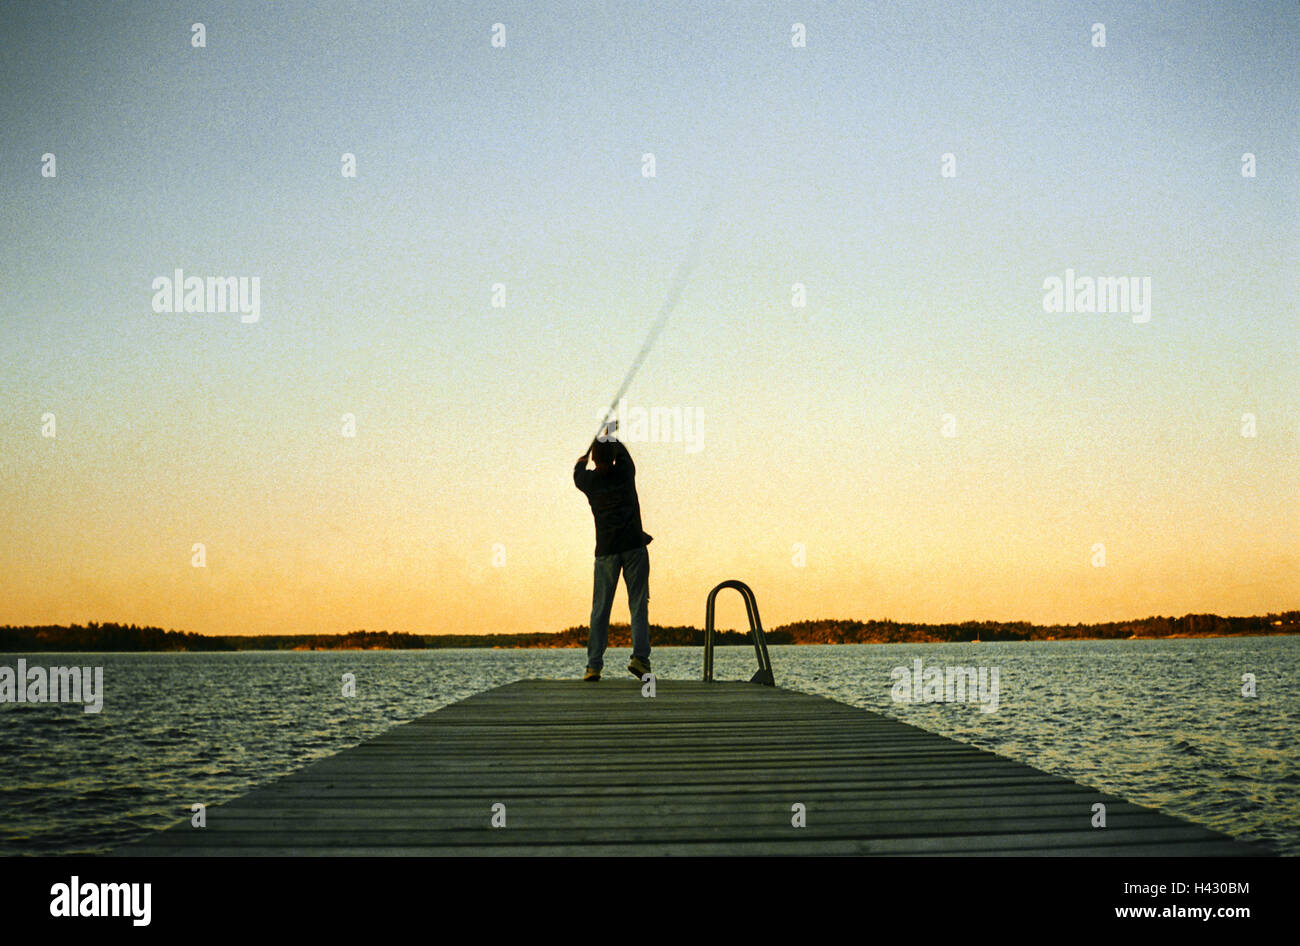 https://c8.alamy.com/comp/H430BM/sea-bridge-man-fishing-rod-casts-move-opinion-dusk-anglers-leisure-H430BM.jpg